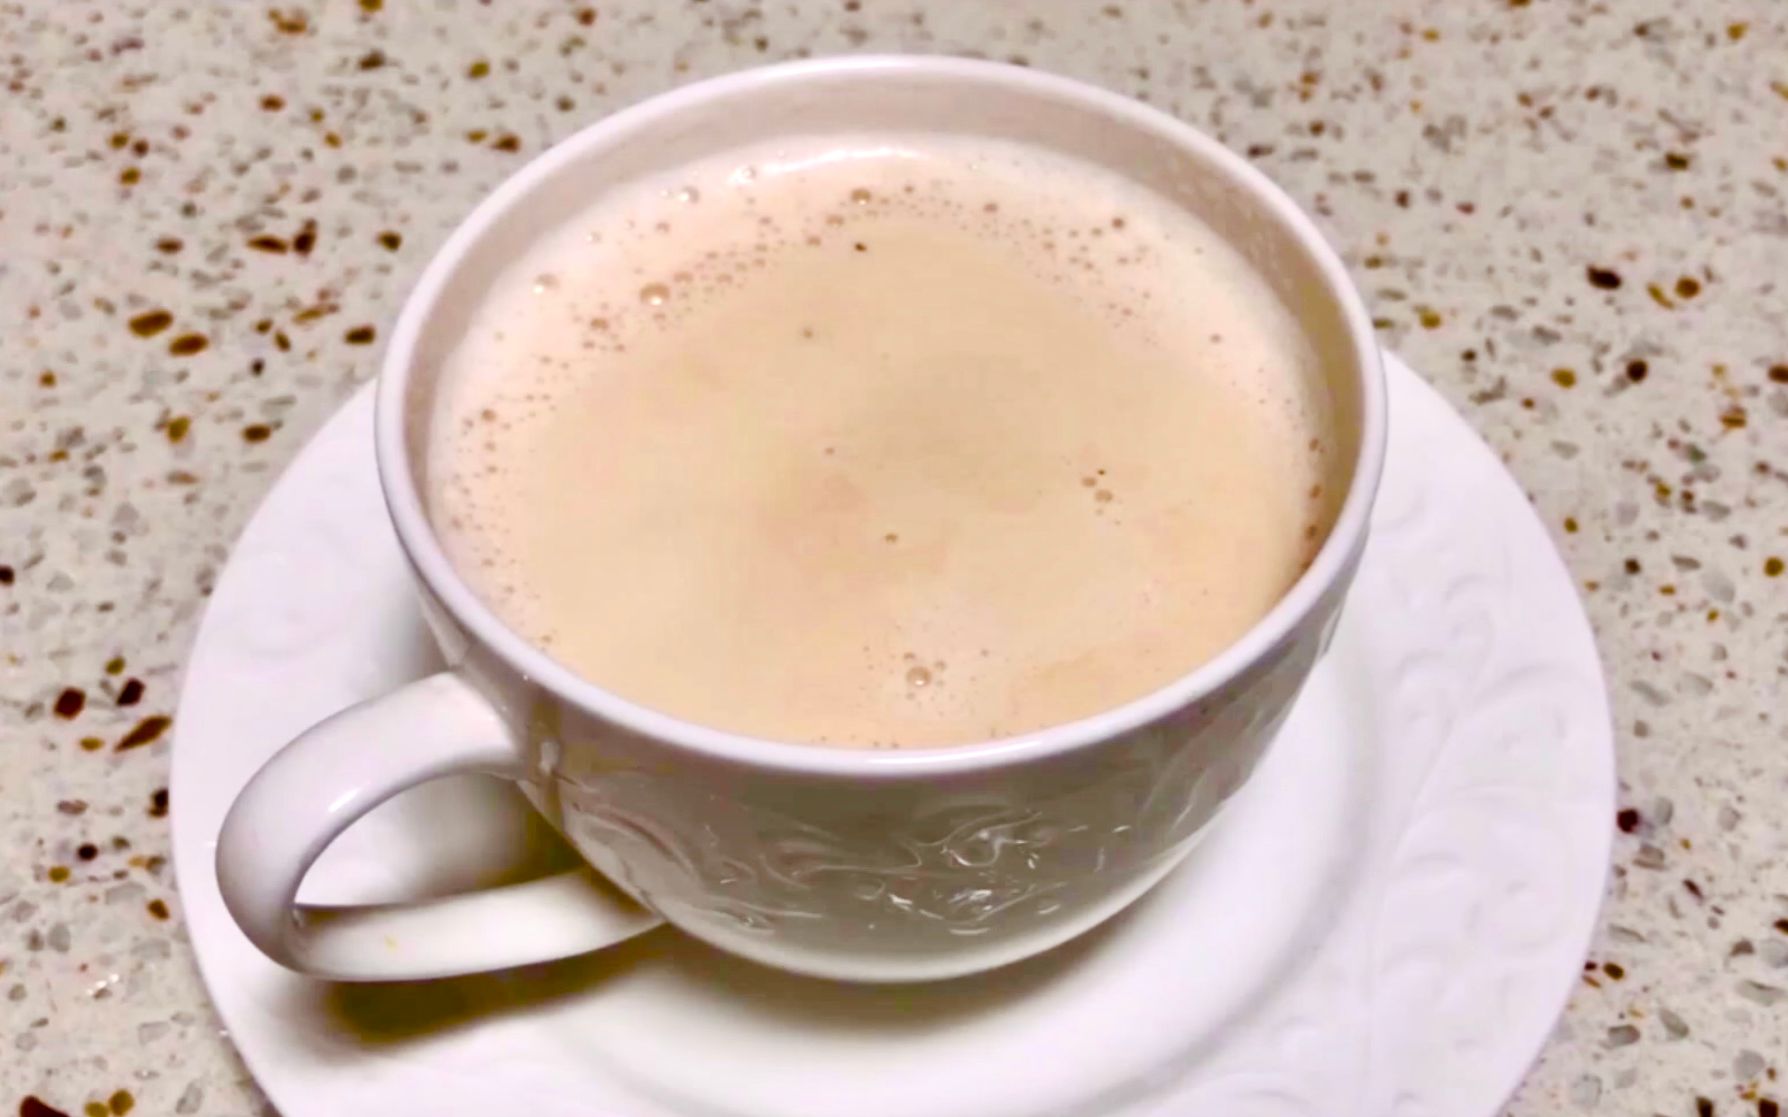 Tealive 推出Diy Bubble Tea Kit 珍珠奶茶自制套组！让你在家自己制作奶茶！ – LEESHARING